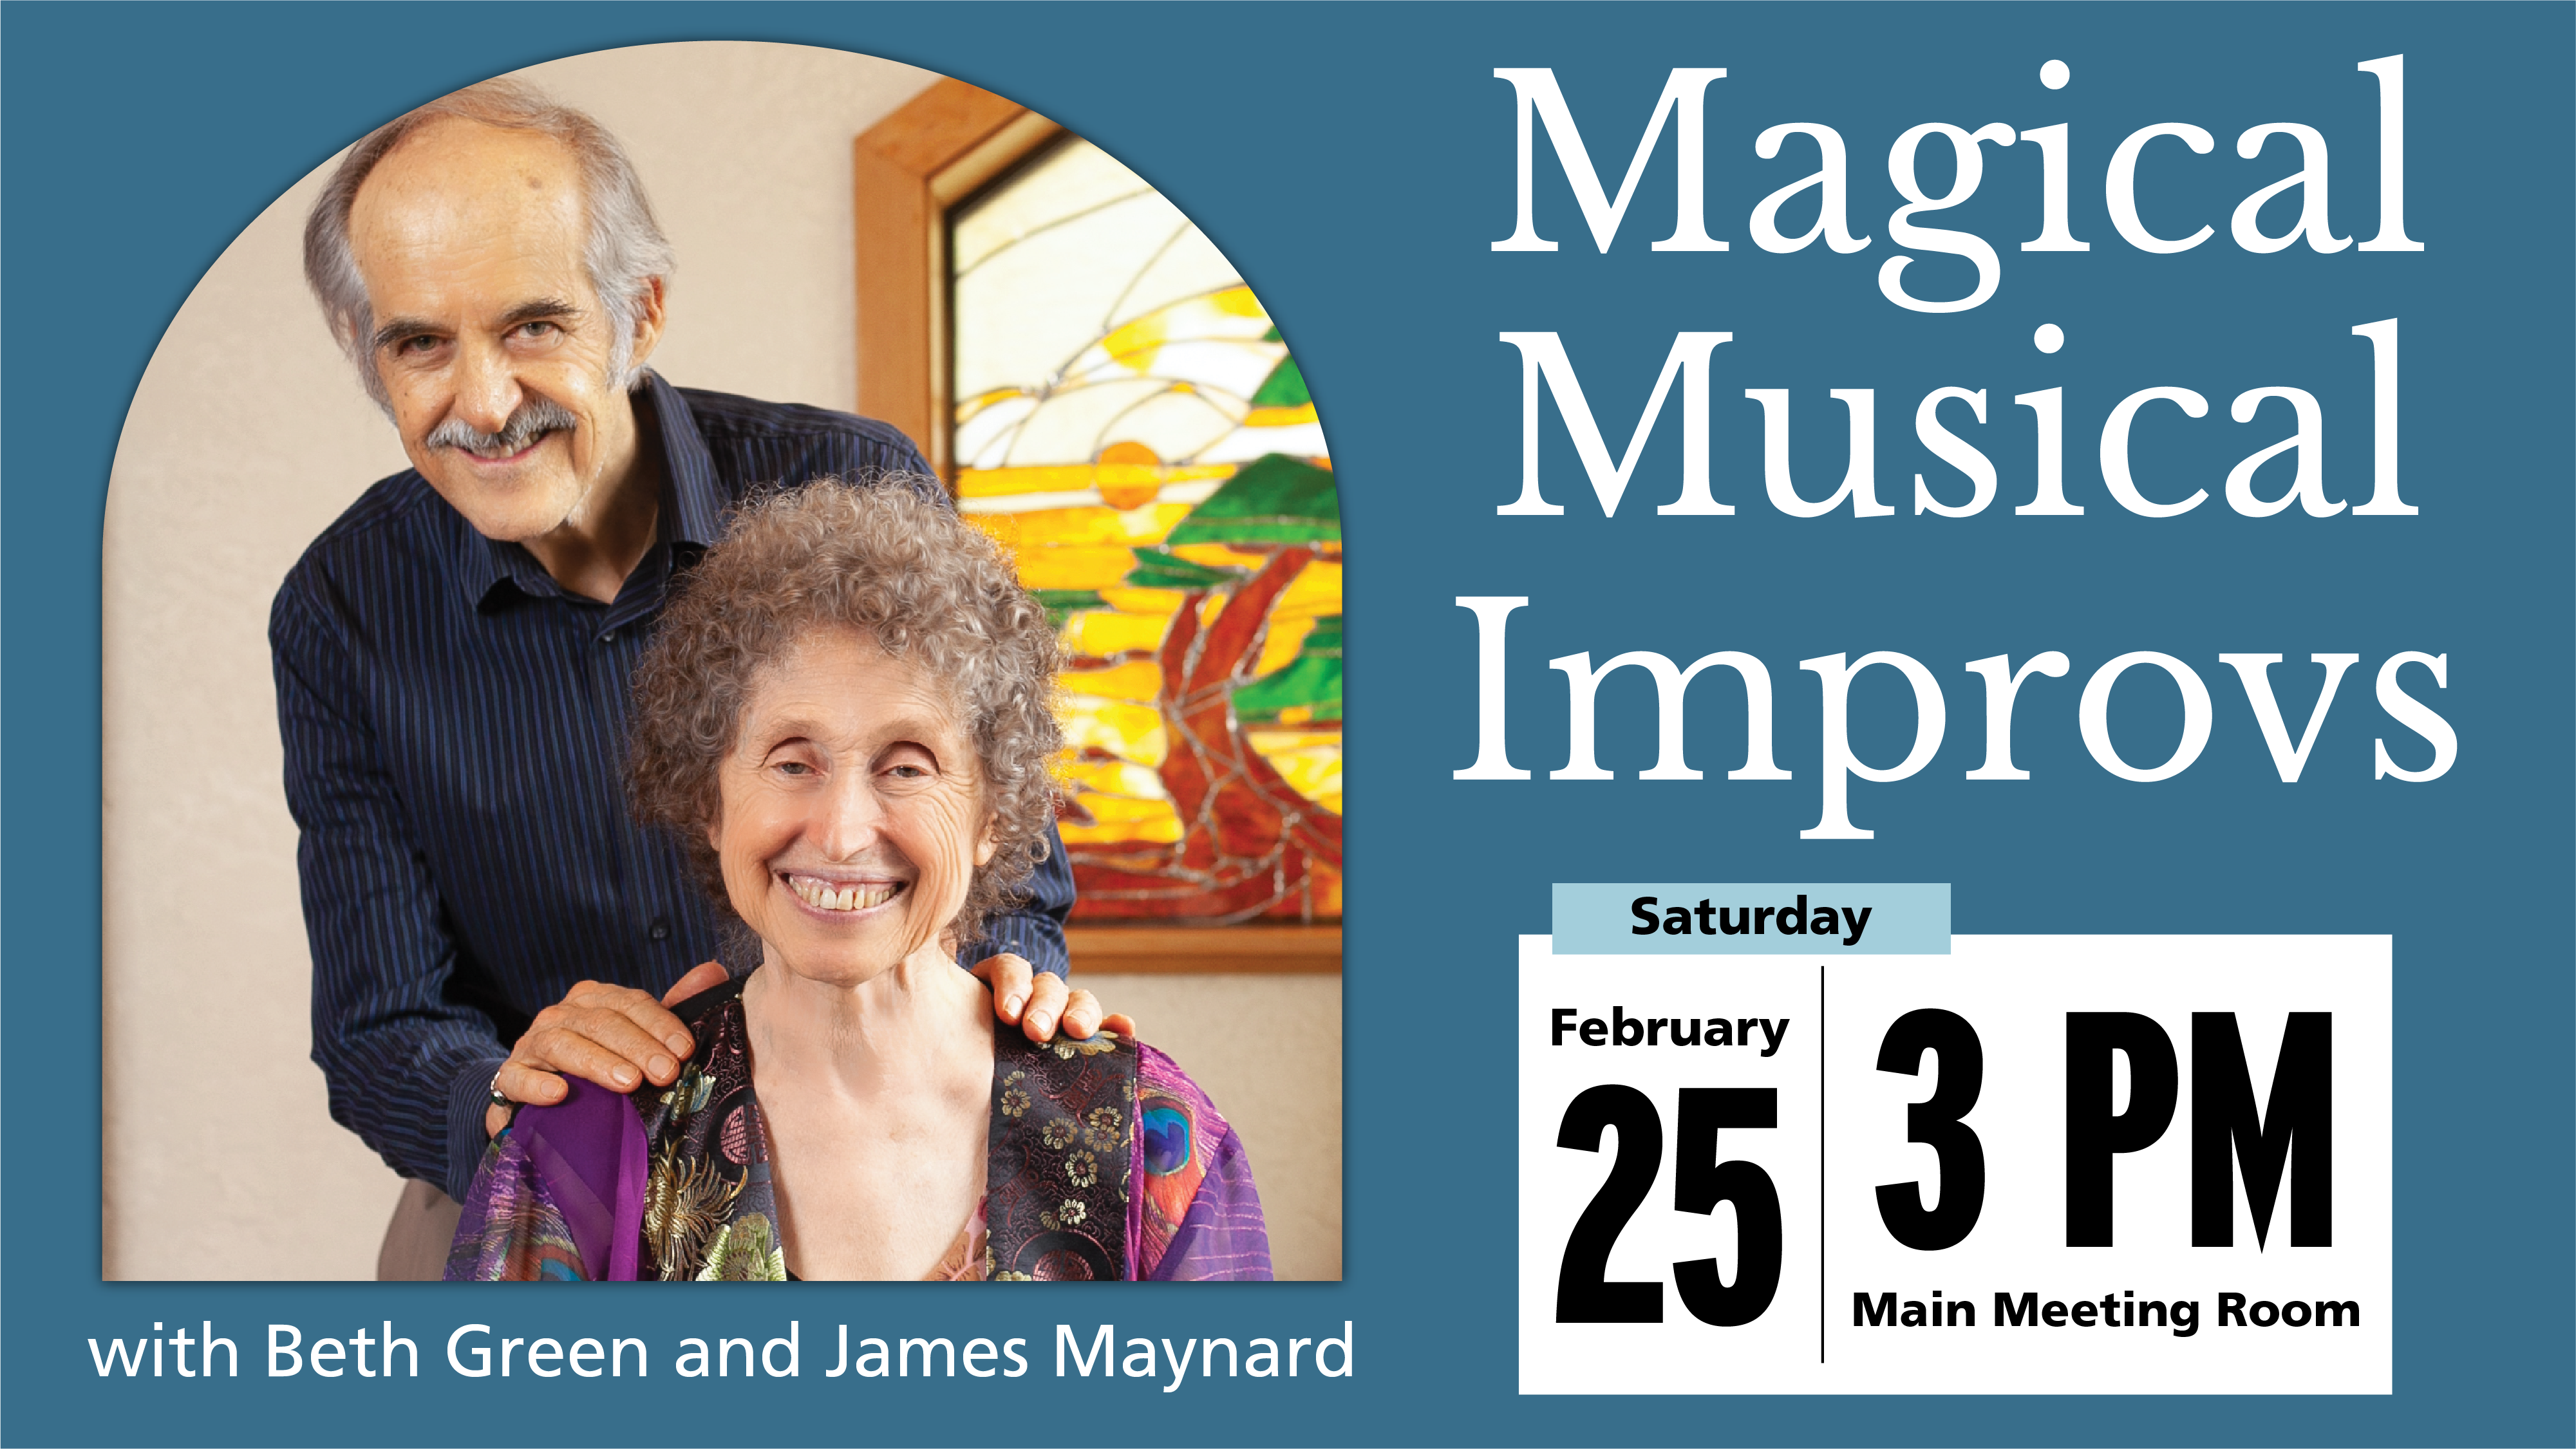 Magical Musical Improvs, Saturday February 25, 3 PM